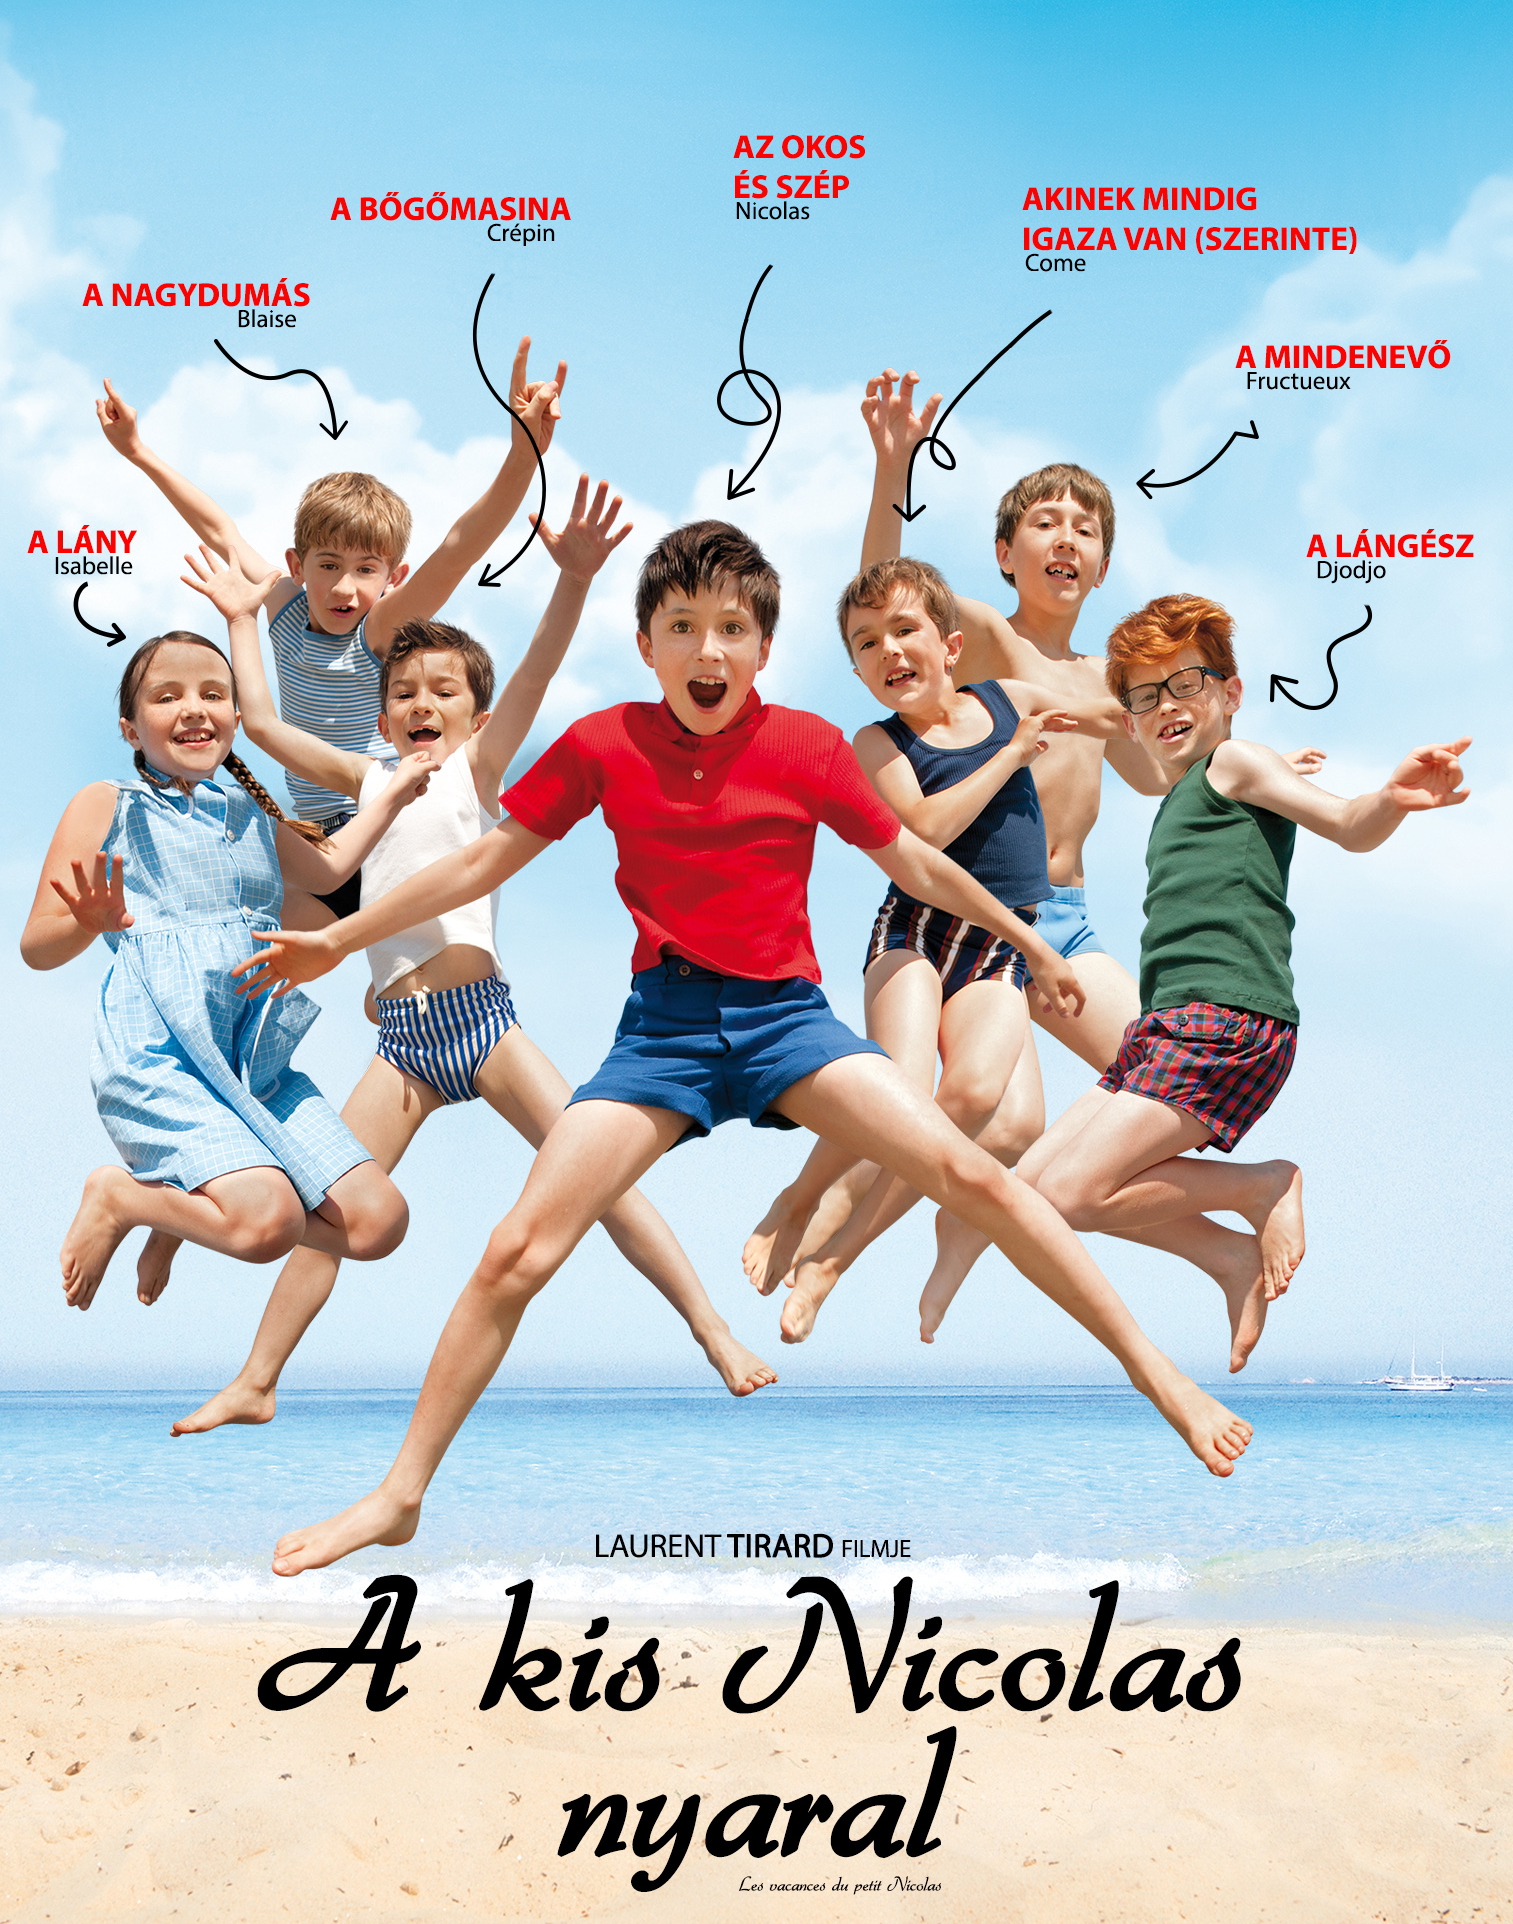 A kis Nicolas nyaral